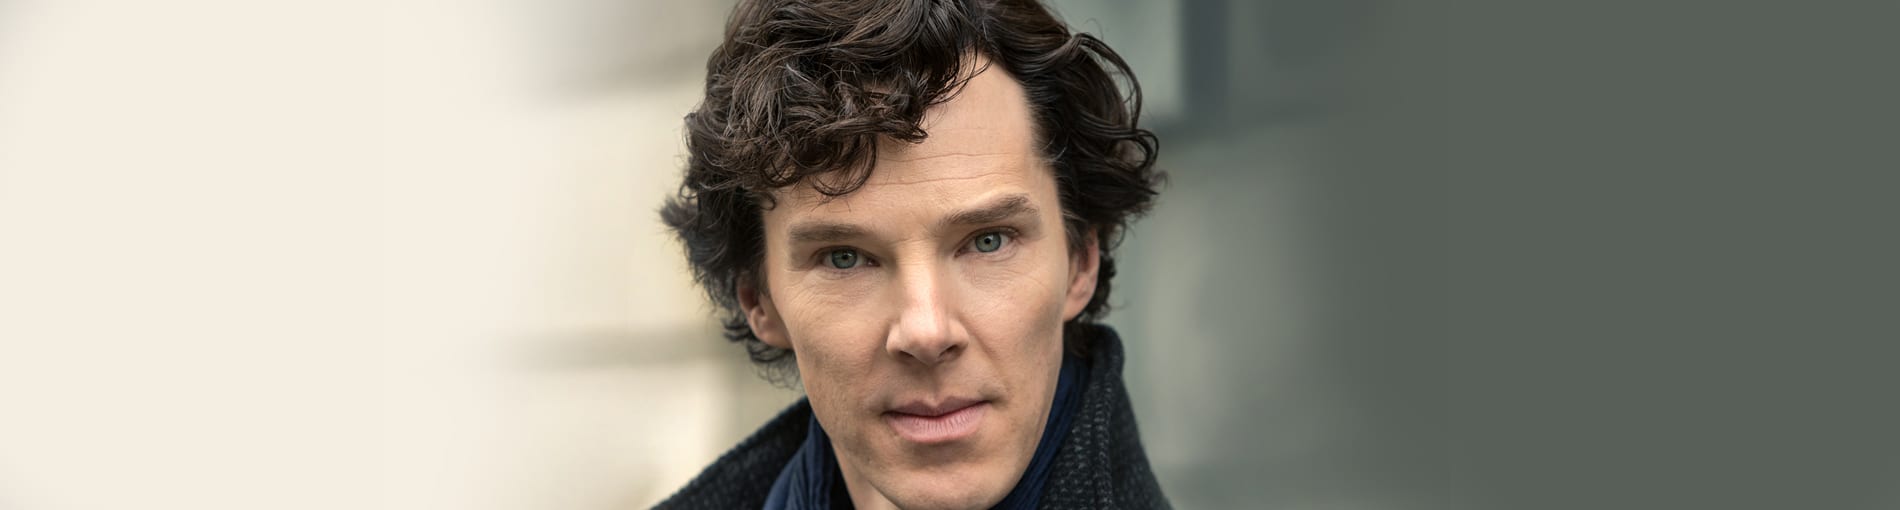 ¿Quién es Benedict Cumberbatch? Te contamos 8 curiosidades que seguramente no sabes sobre él.